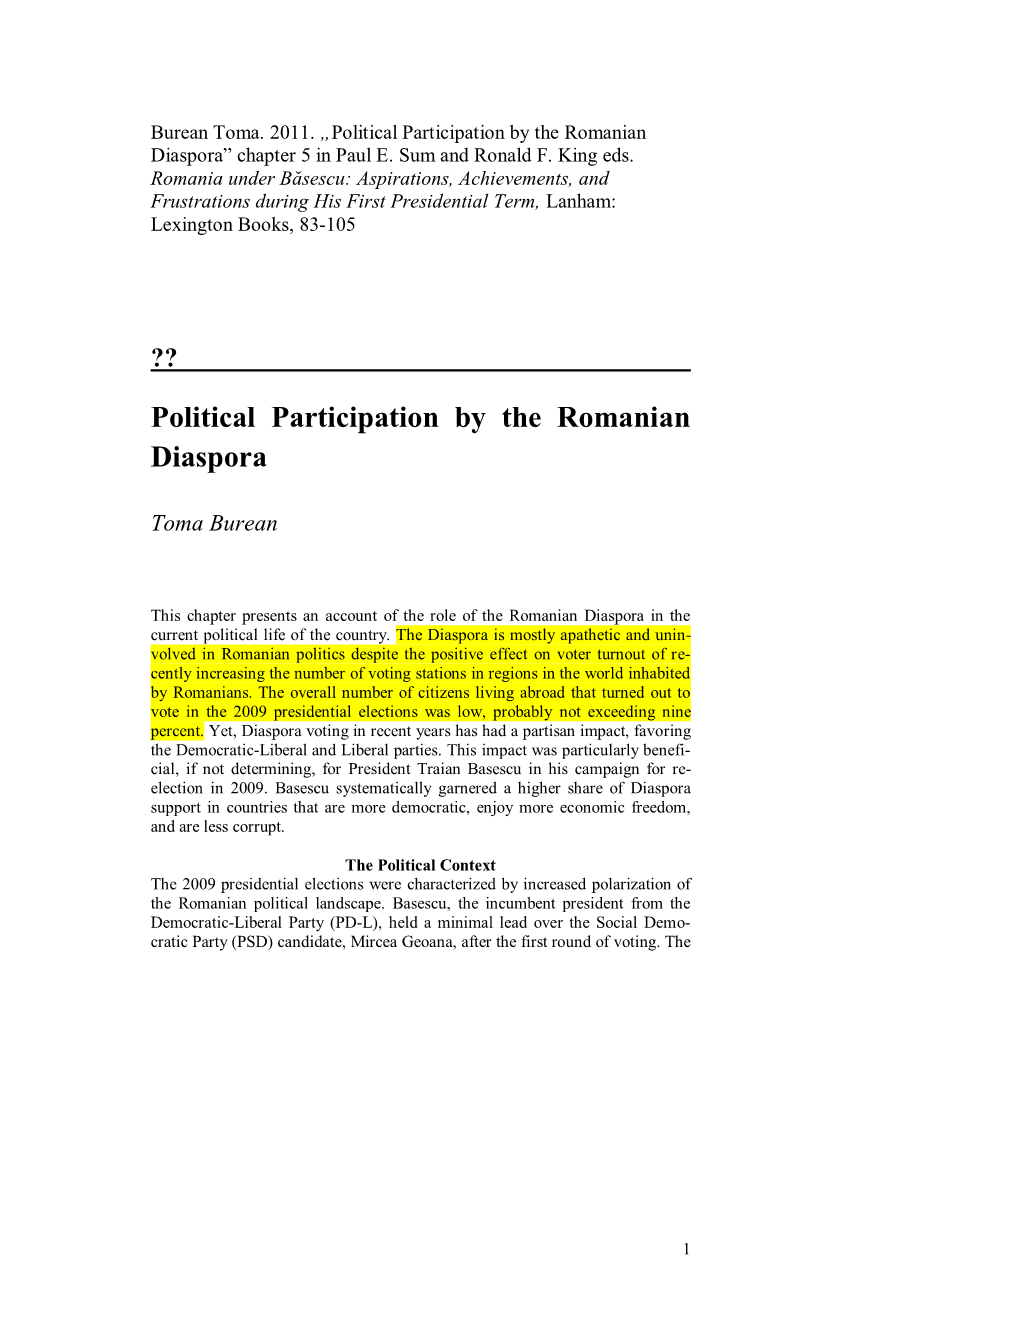 The Political Participation of the Romanian Diaspora